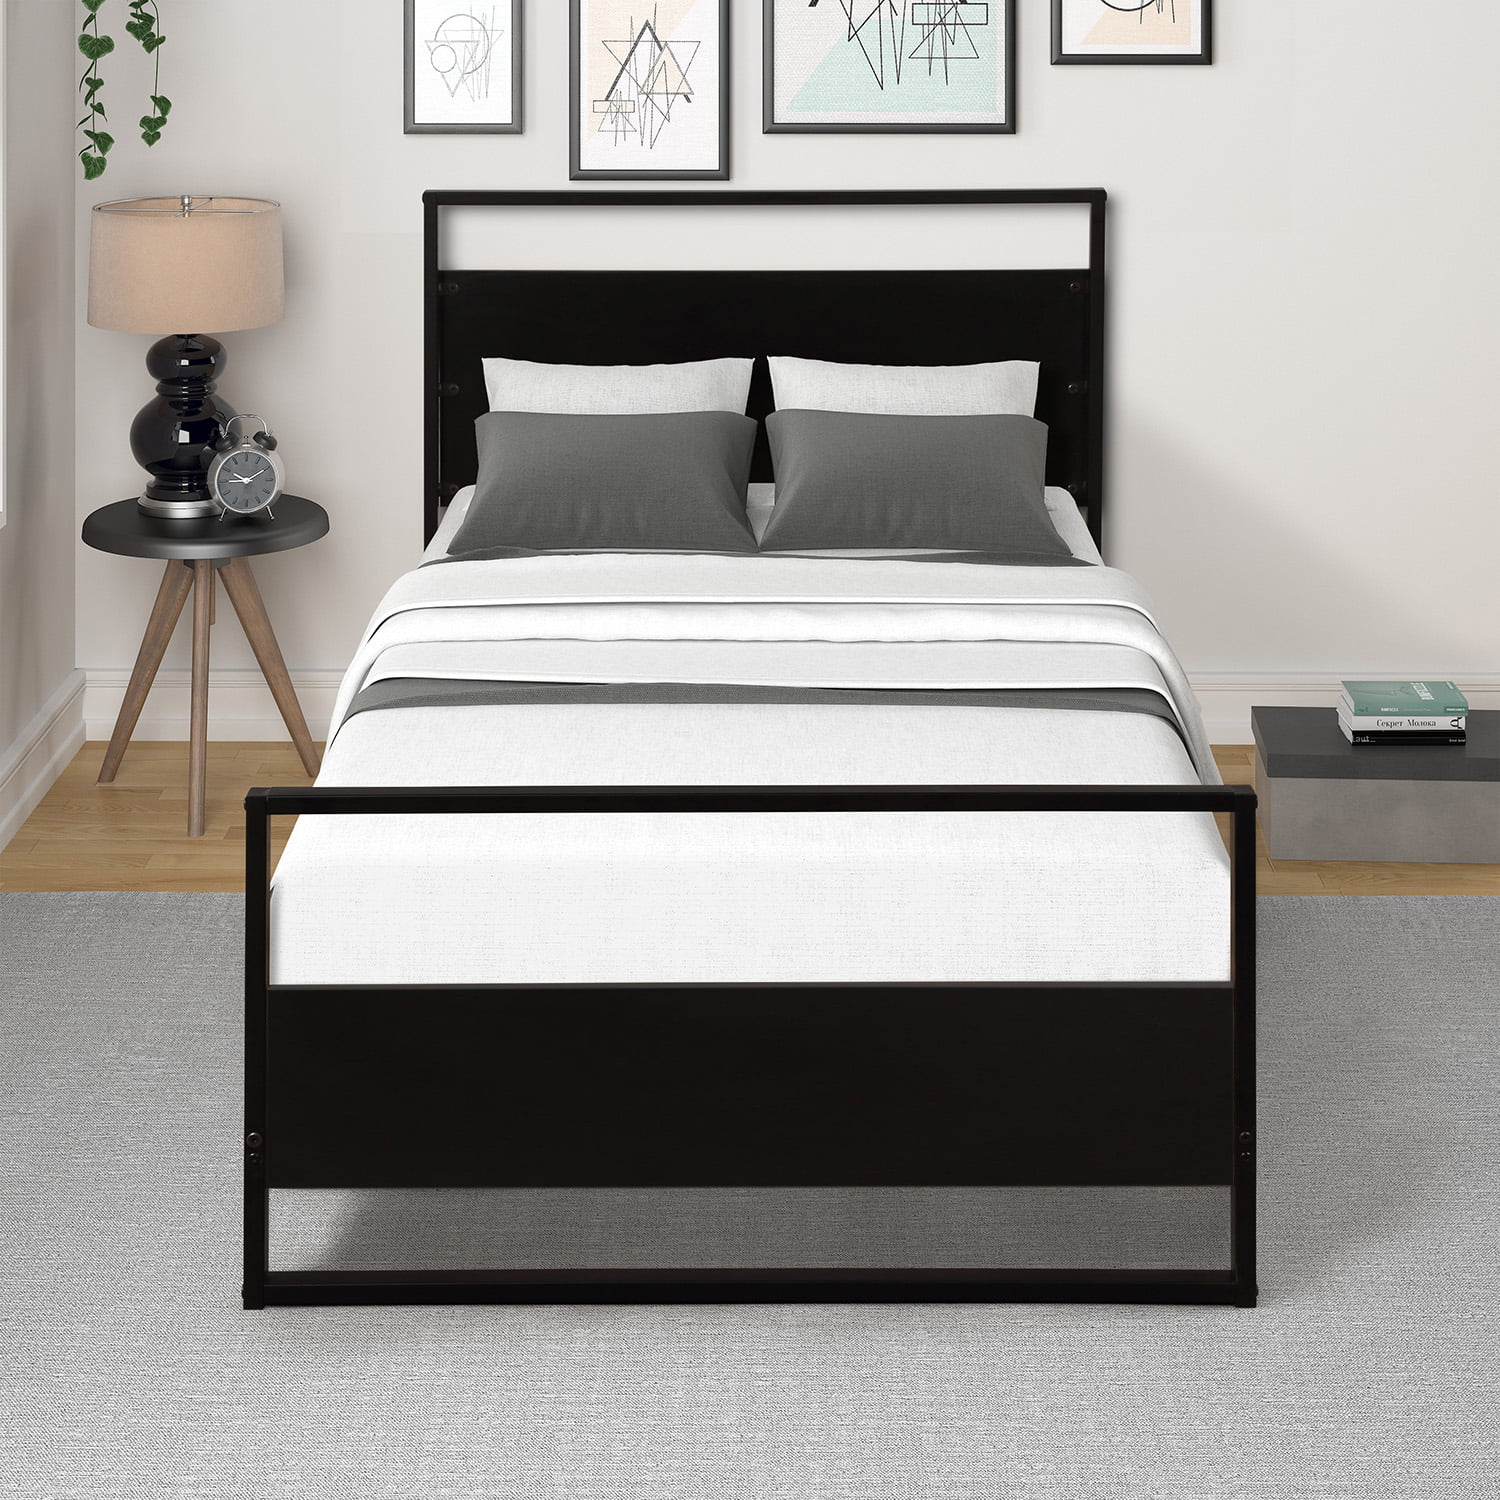 Twin Metal Bed Frame Black, Twin Bed Headboard And Footboard